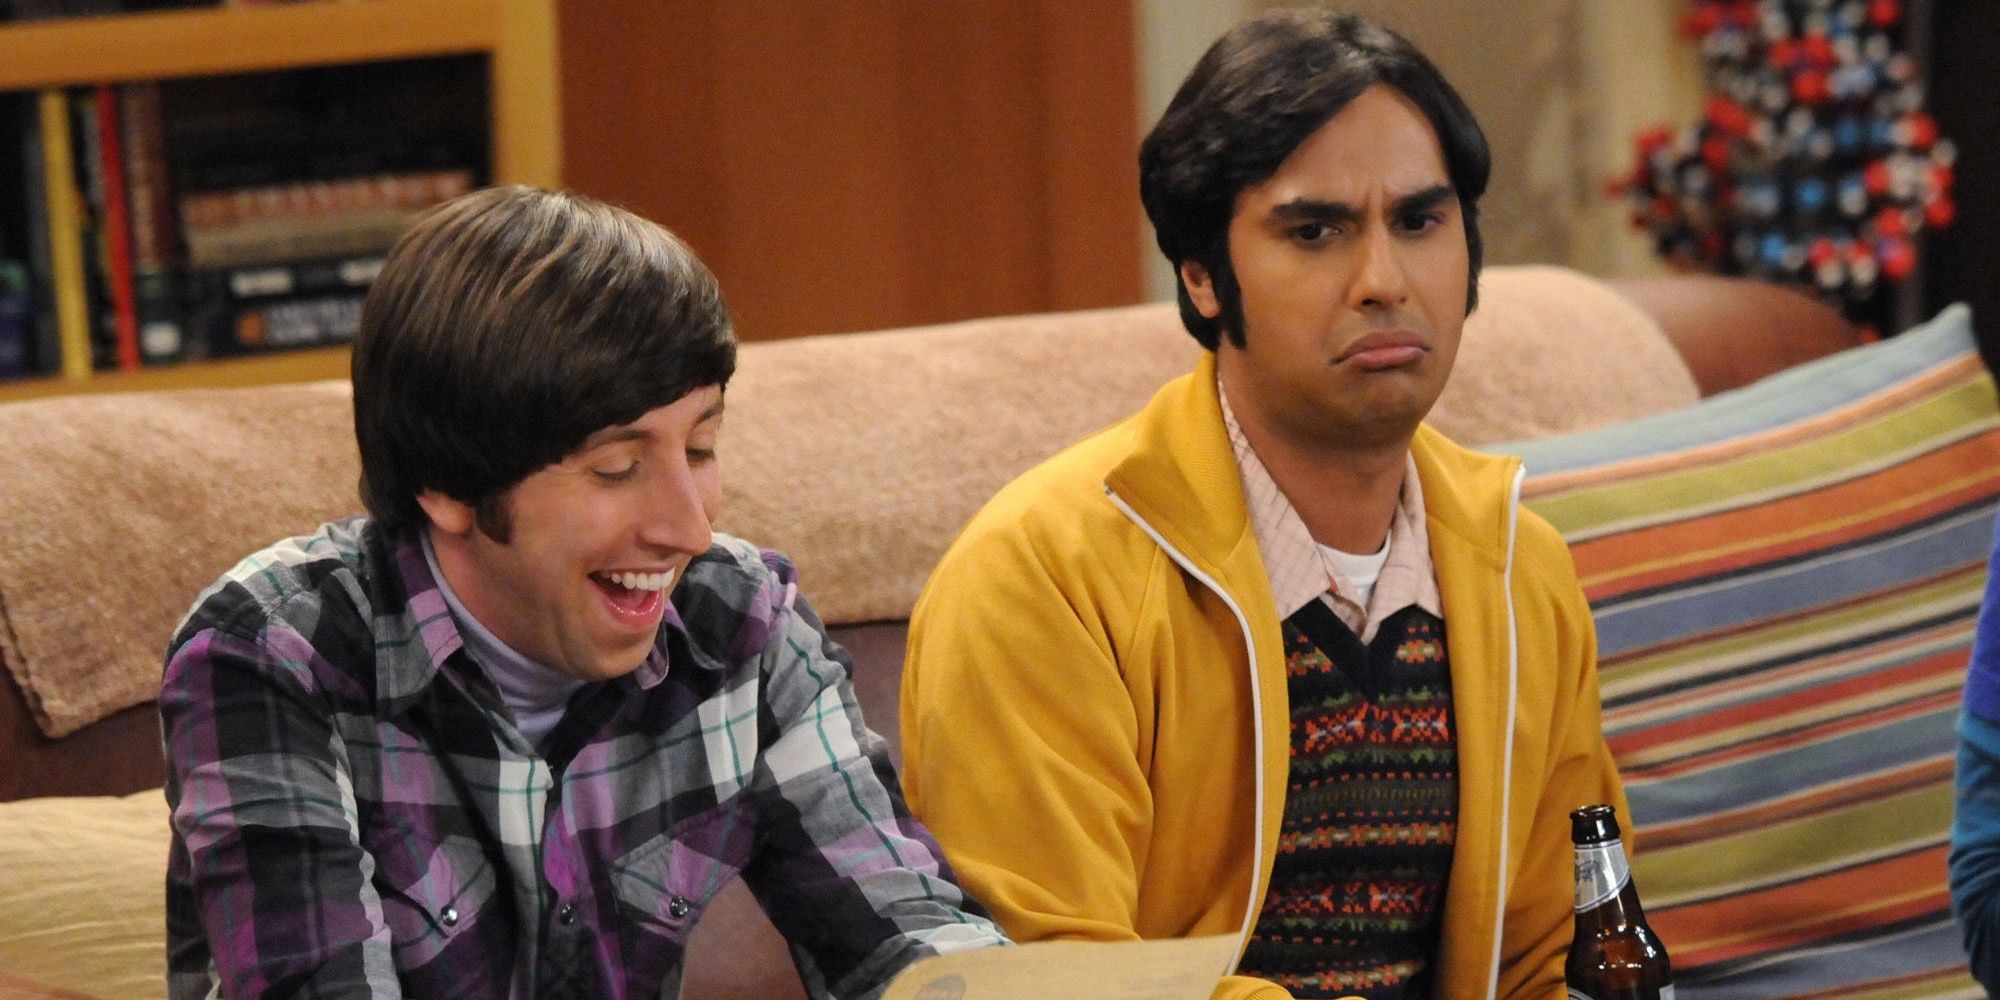 Howard laughs while Raj looks sad in The Big Bang Theory.